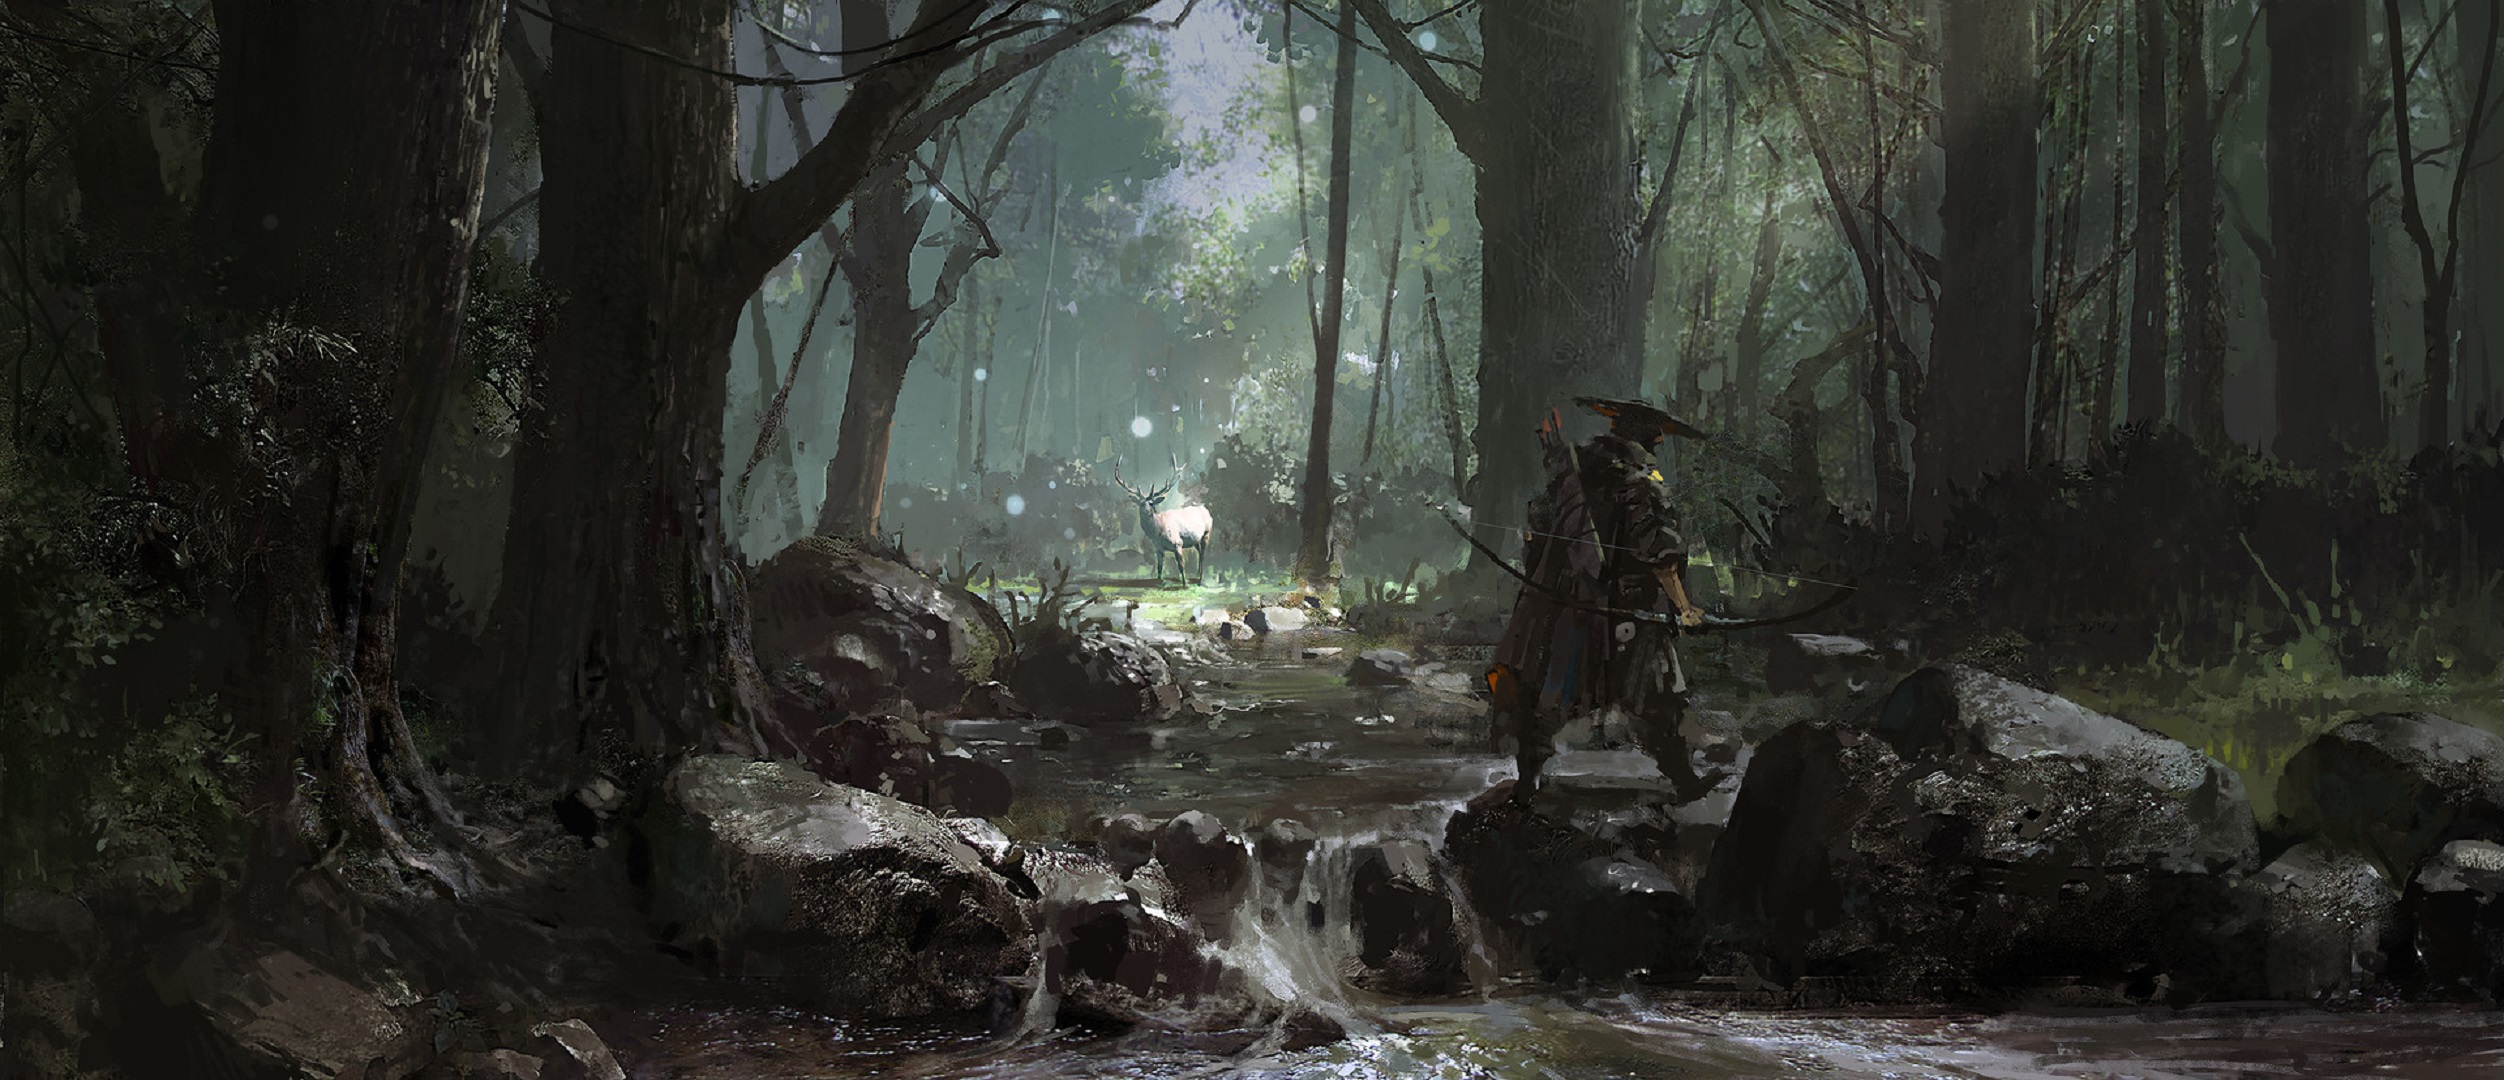 General 2504x1080 digital art hunter warrior landscape arc river forest fantasy art deer su jian